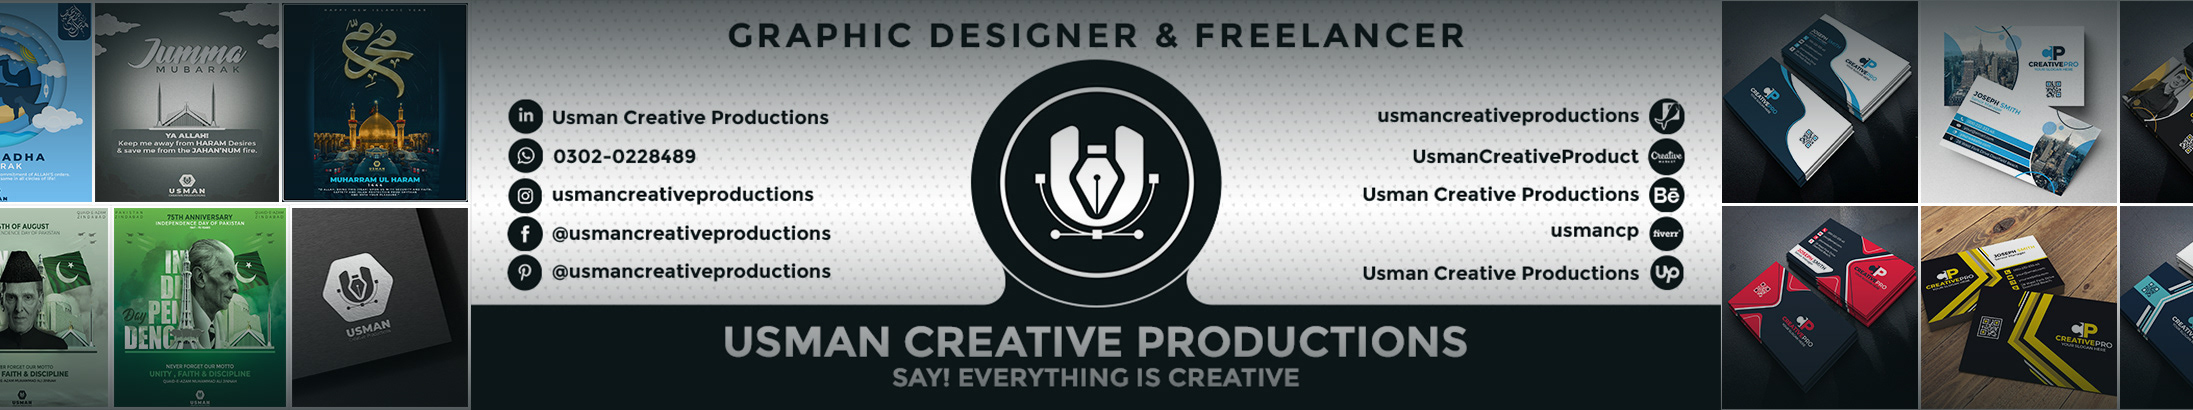 Usman Creative Productions's profile banner